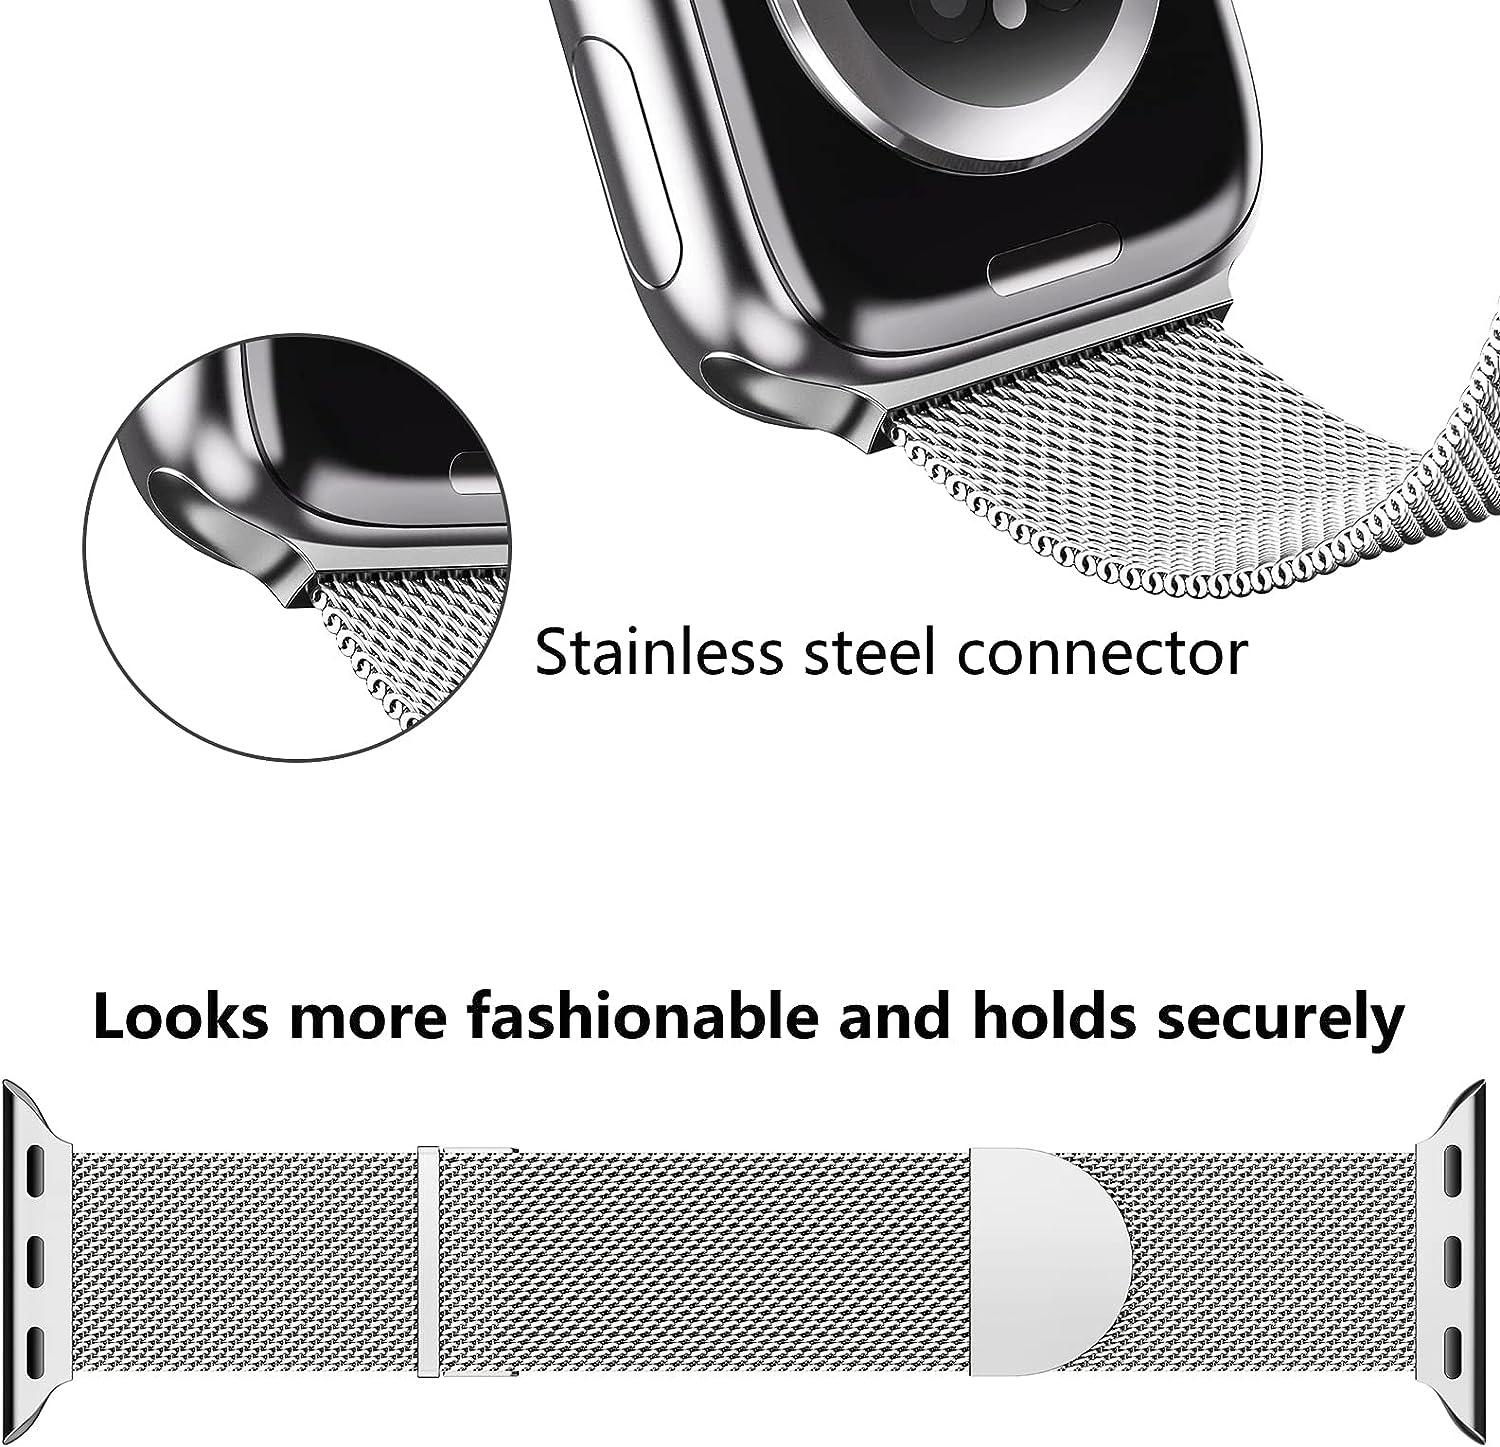 Stainless Steel Mesh Strap Women's Watch Manufacturer, Custom